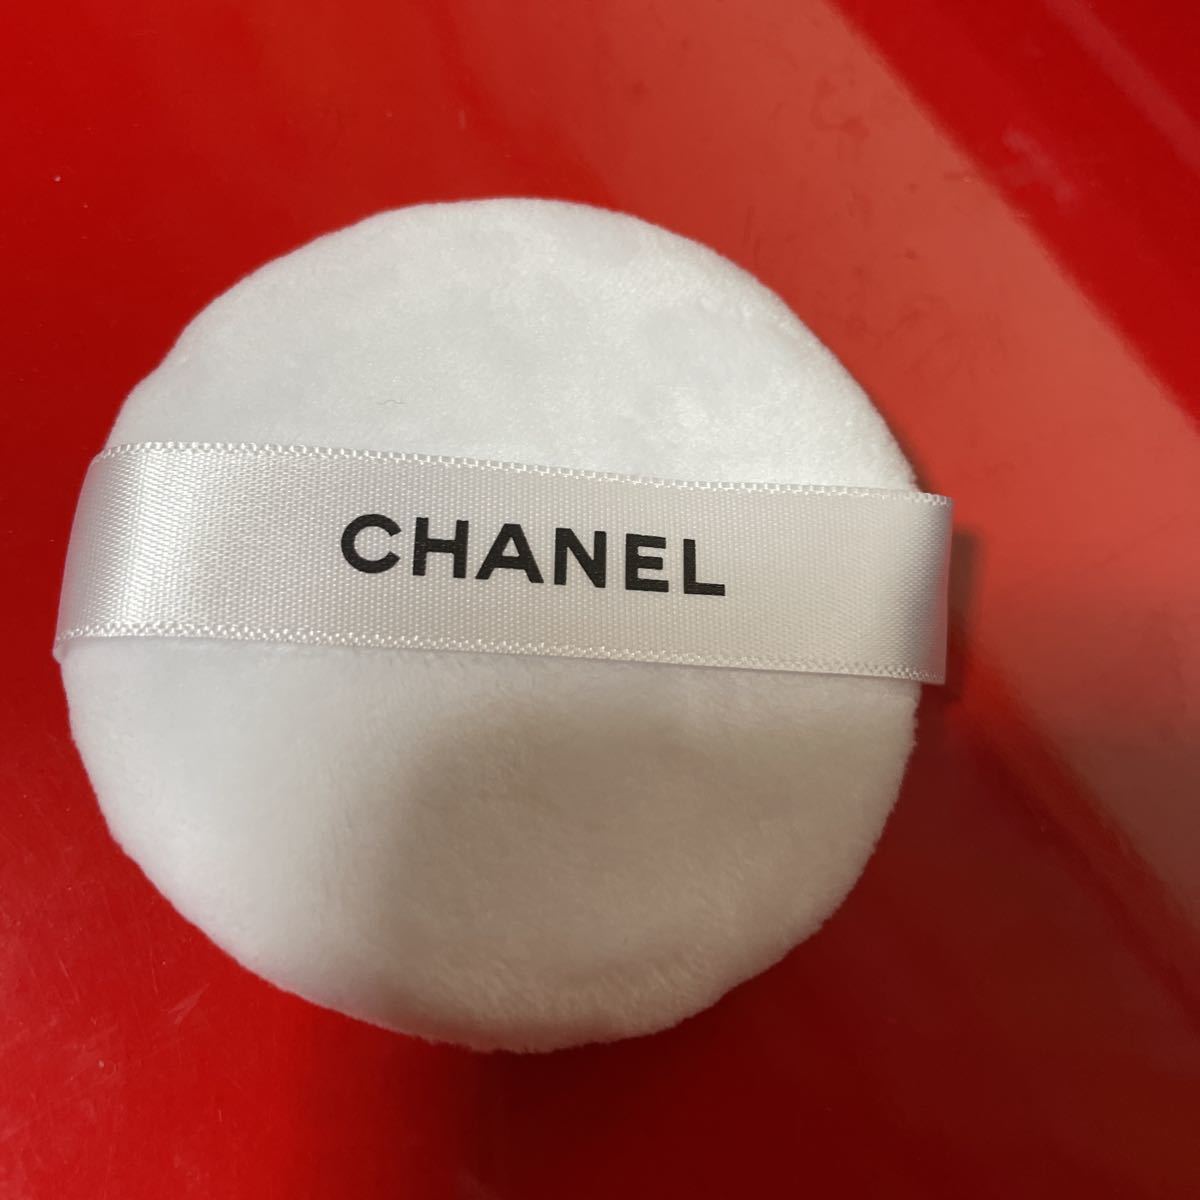 Chanel Chanel Pudur Univercell Libble n Face Powder включал в себя новое решение для нового продукта